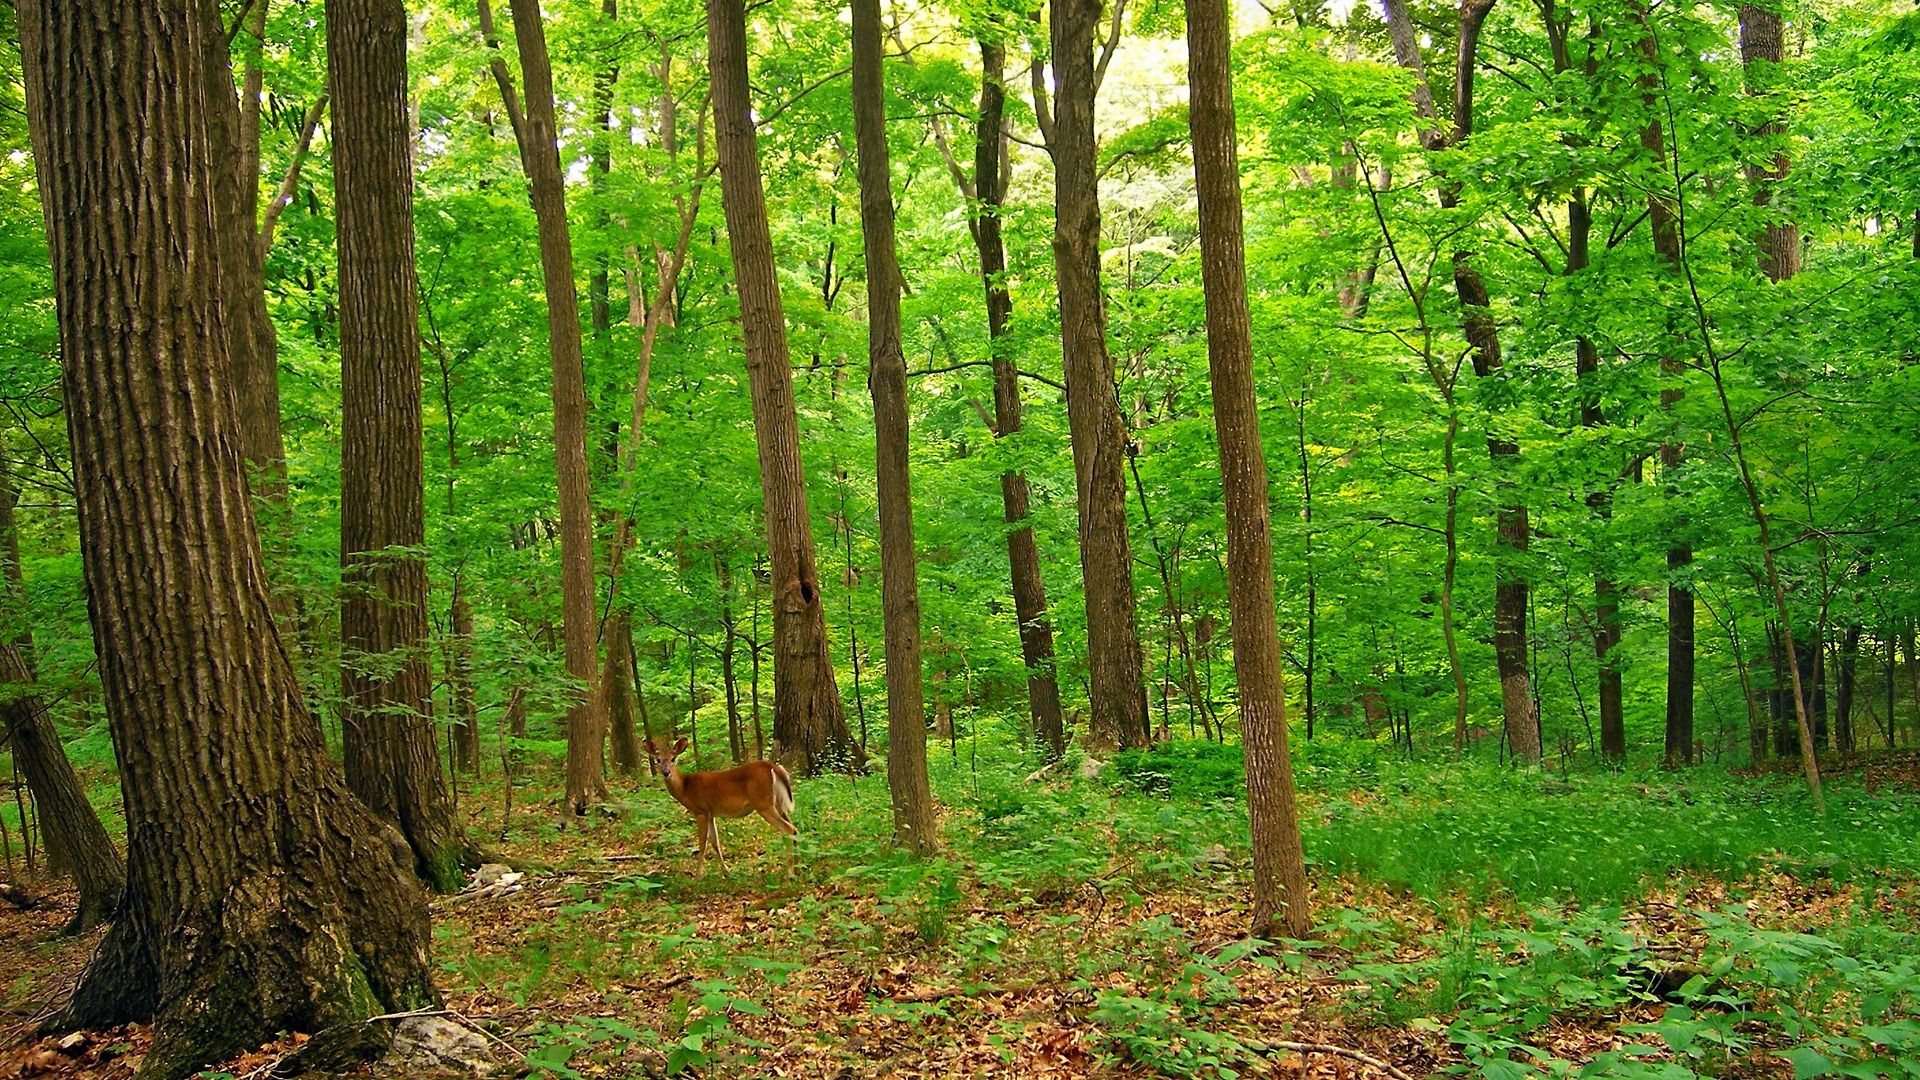 Deer In The Forest Wallpaper Deers Animals Wallpaper in jpg format for free download